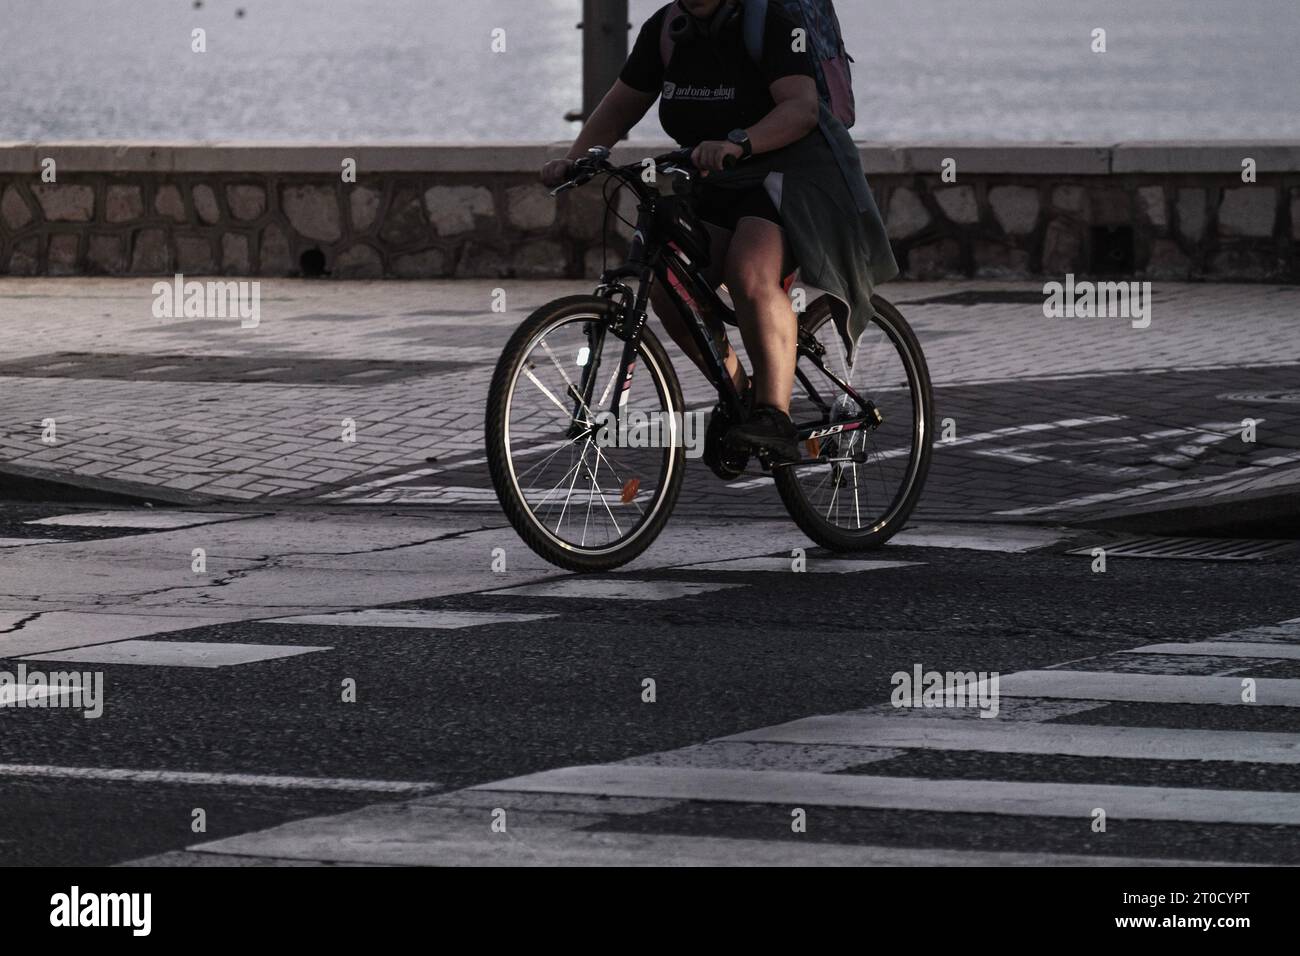 People doing sports on the promenade, Man riding a bike crossing the pedestrian crossing bike lane Stock Photo